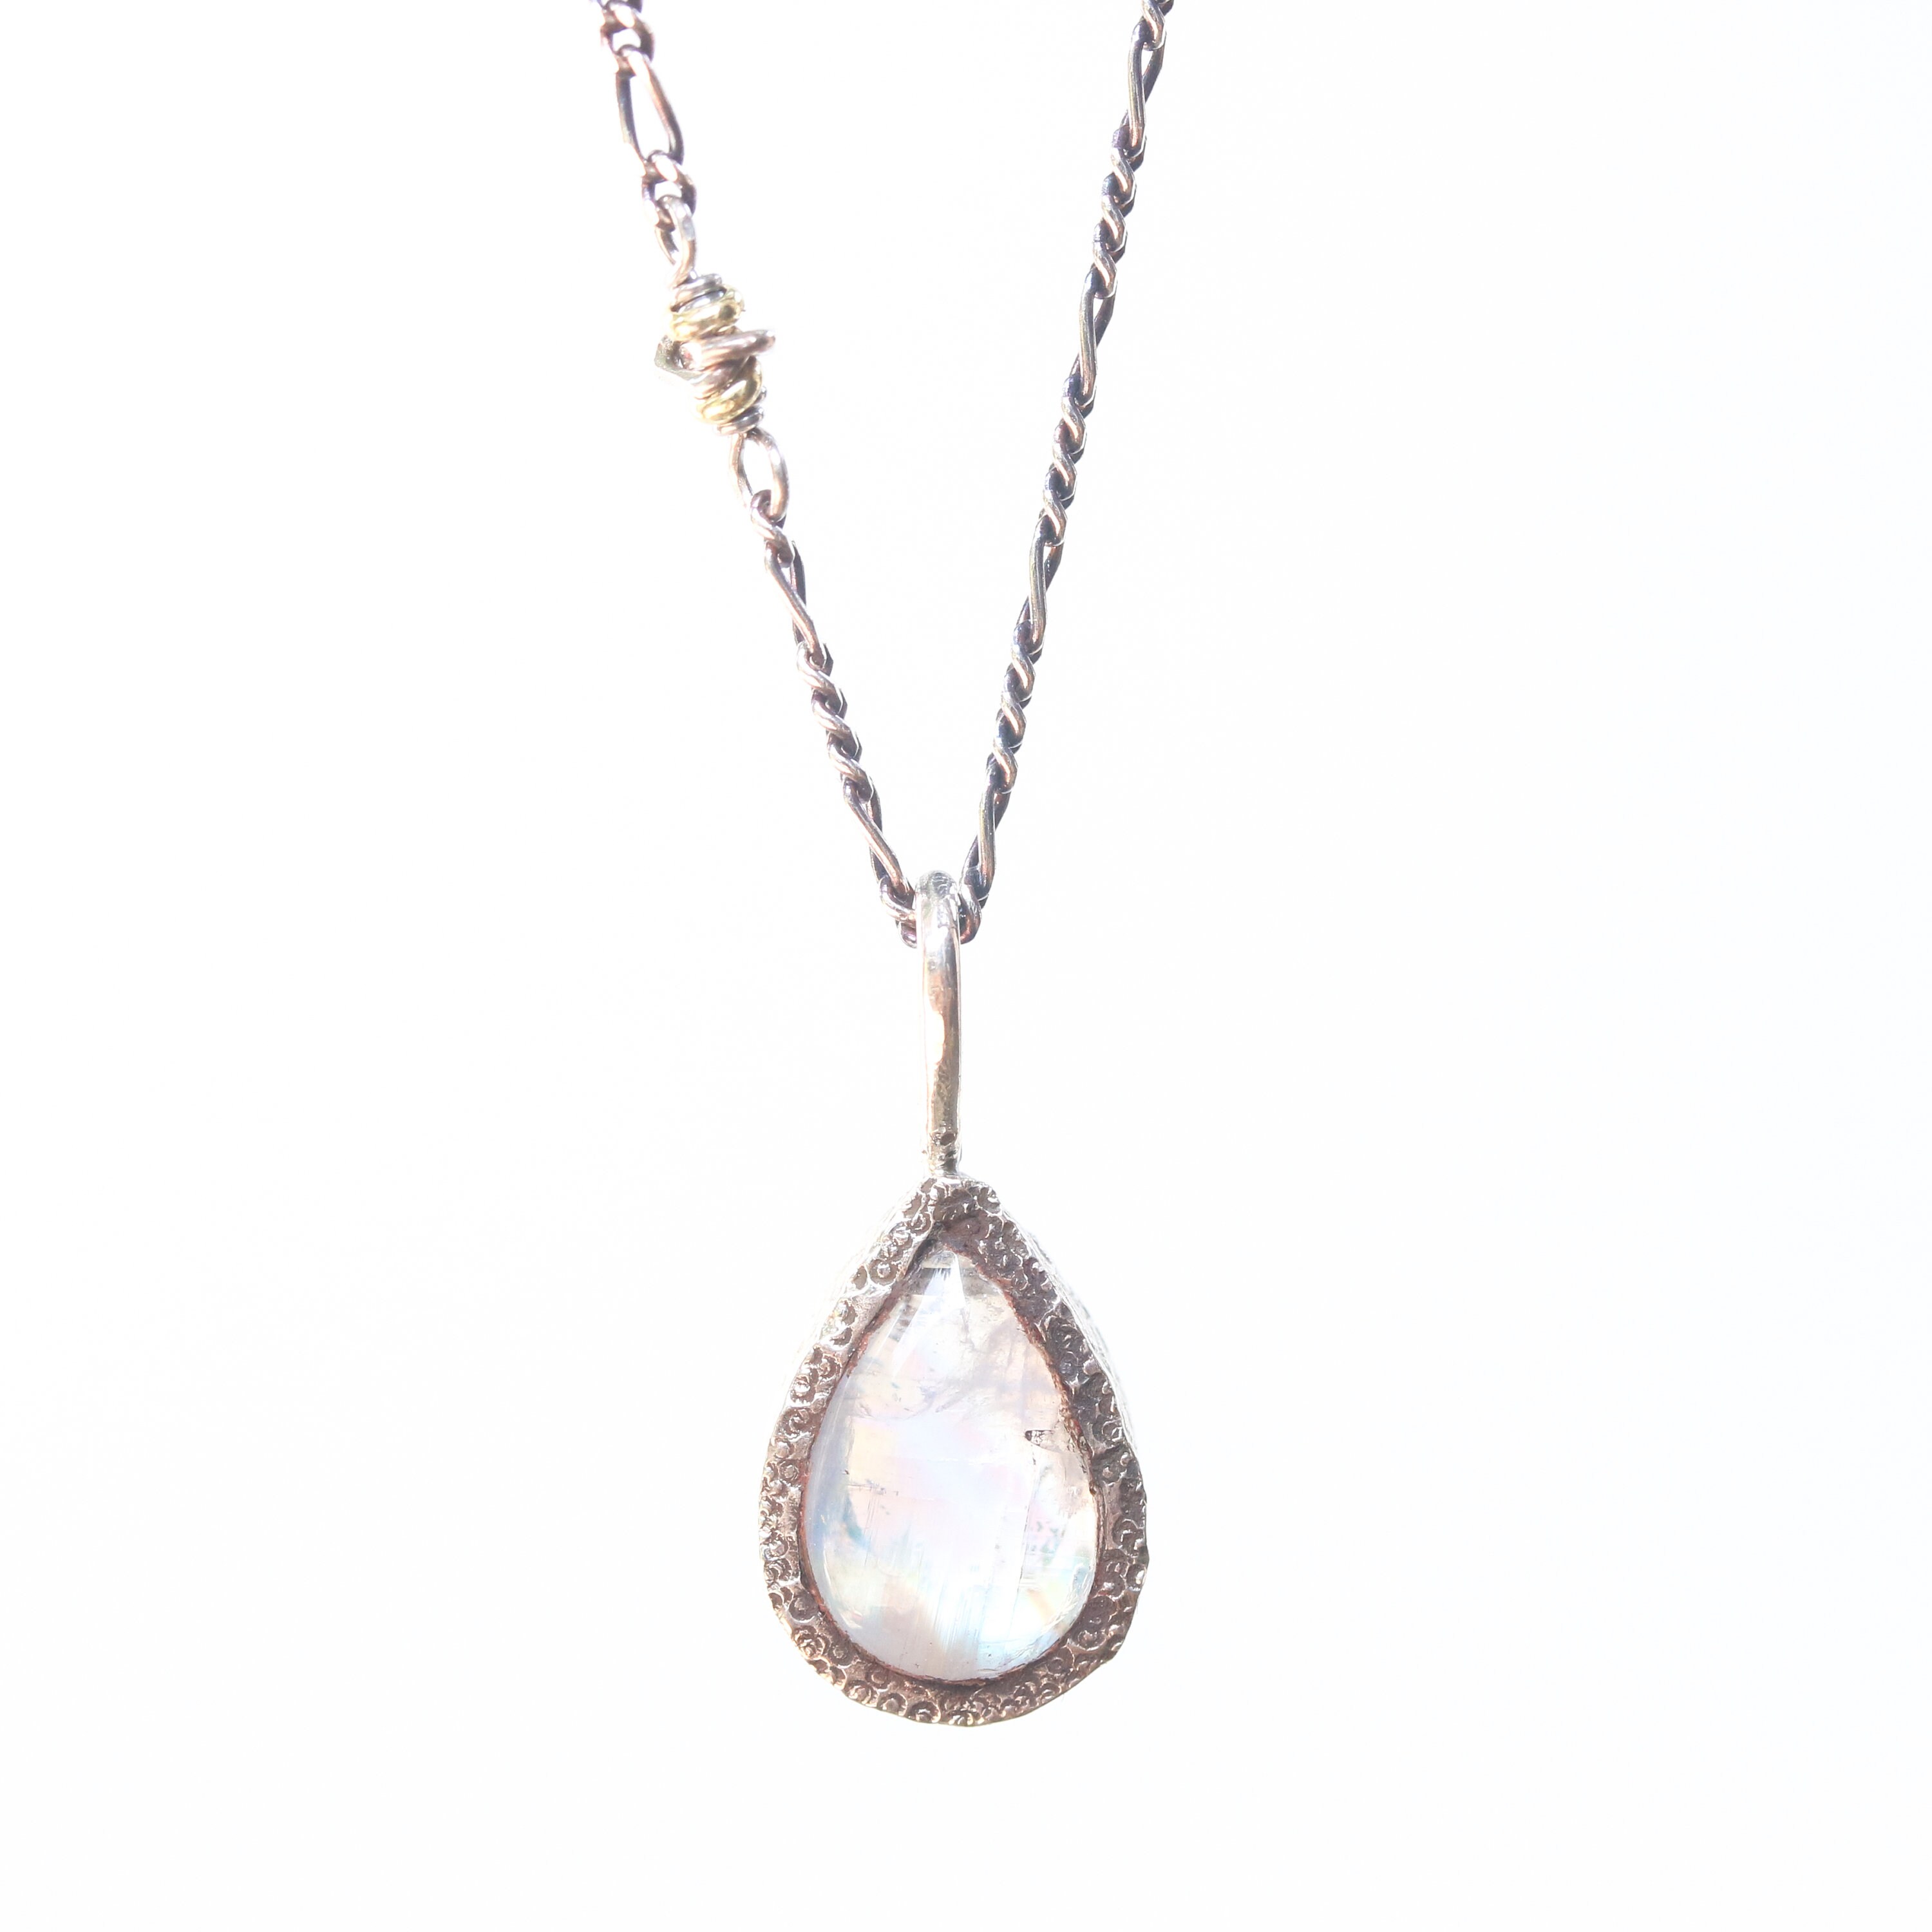 Teardrop cabochon Moonstone pendant necklace in silver bezel | Etsy